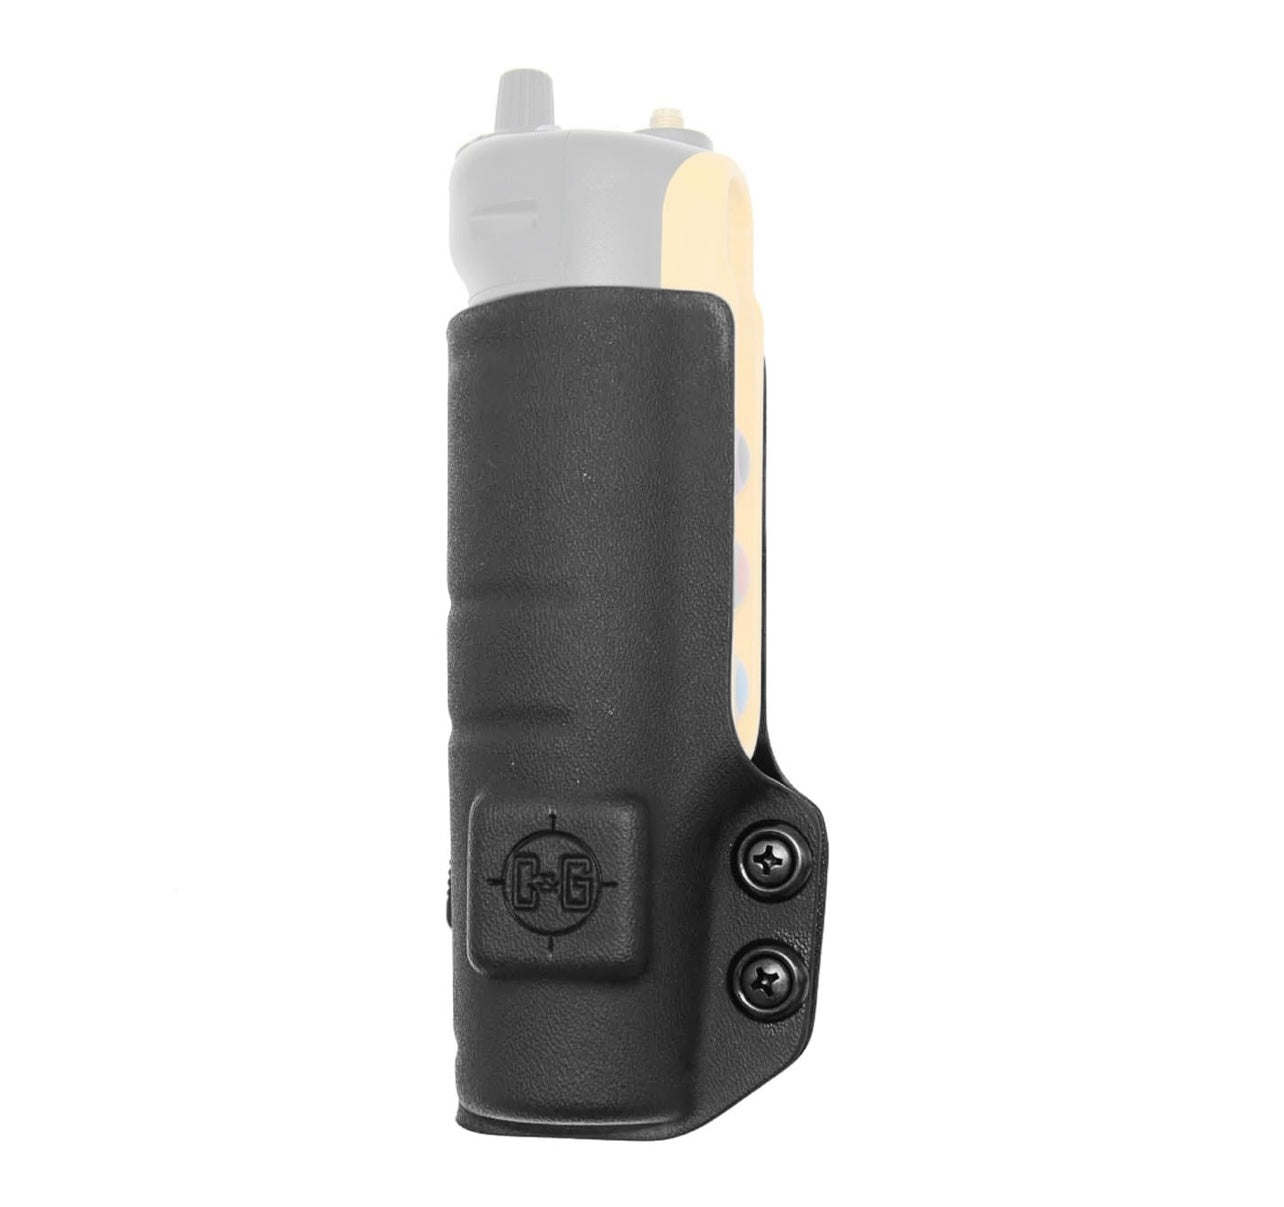 C&G Holsters SK-9 Garmin Tri-Tronics E-Collar Remote Holder